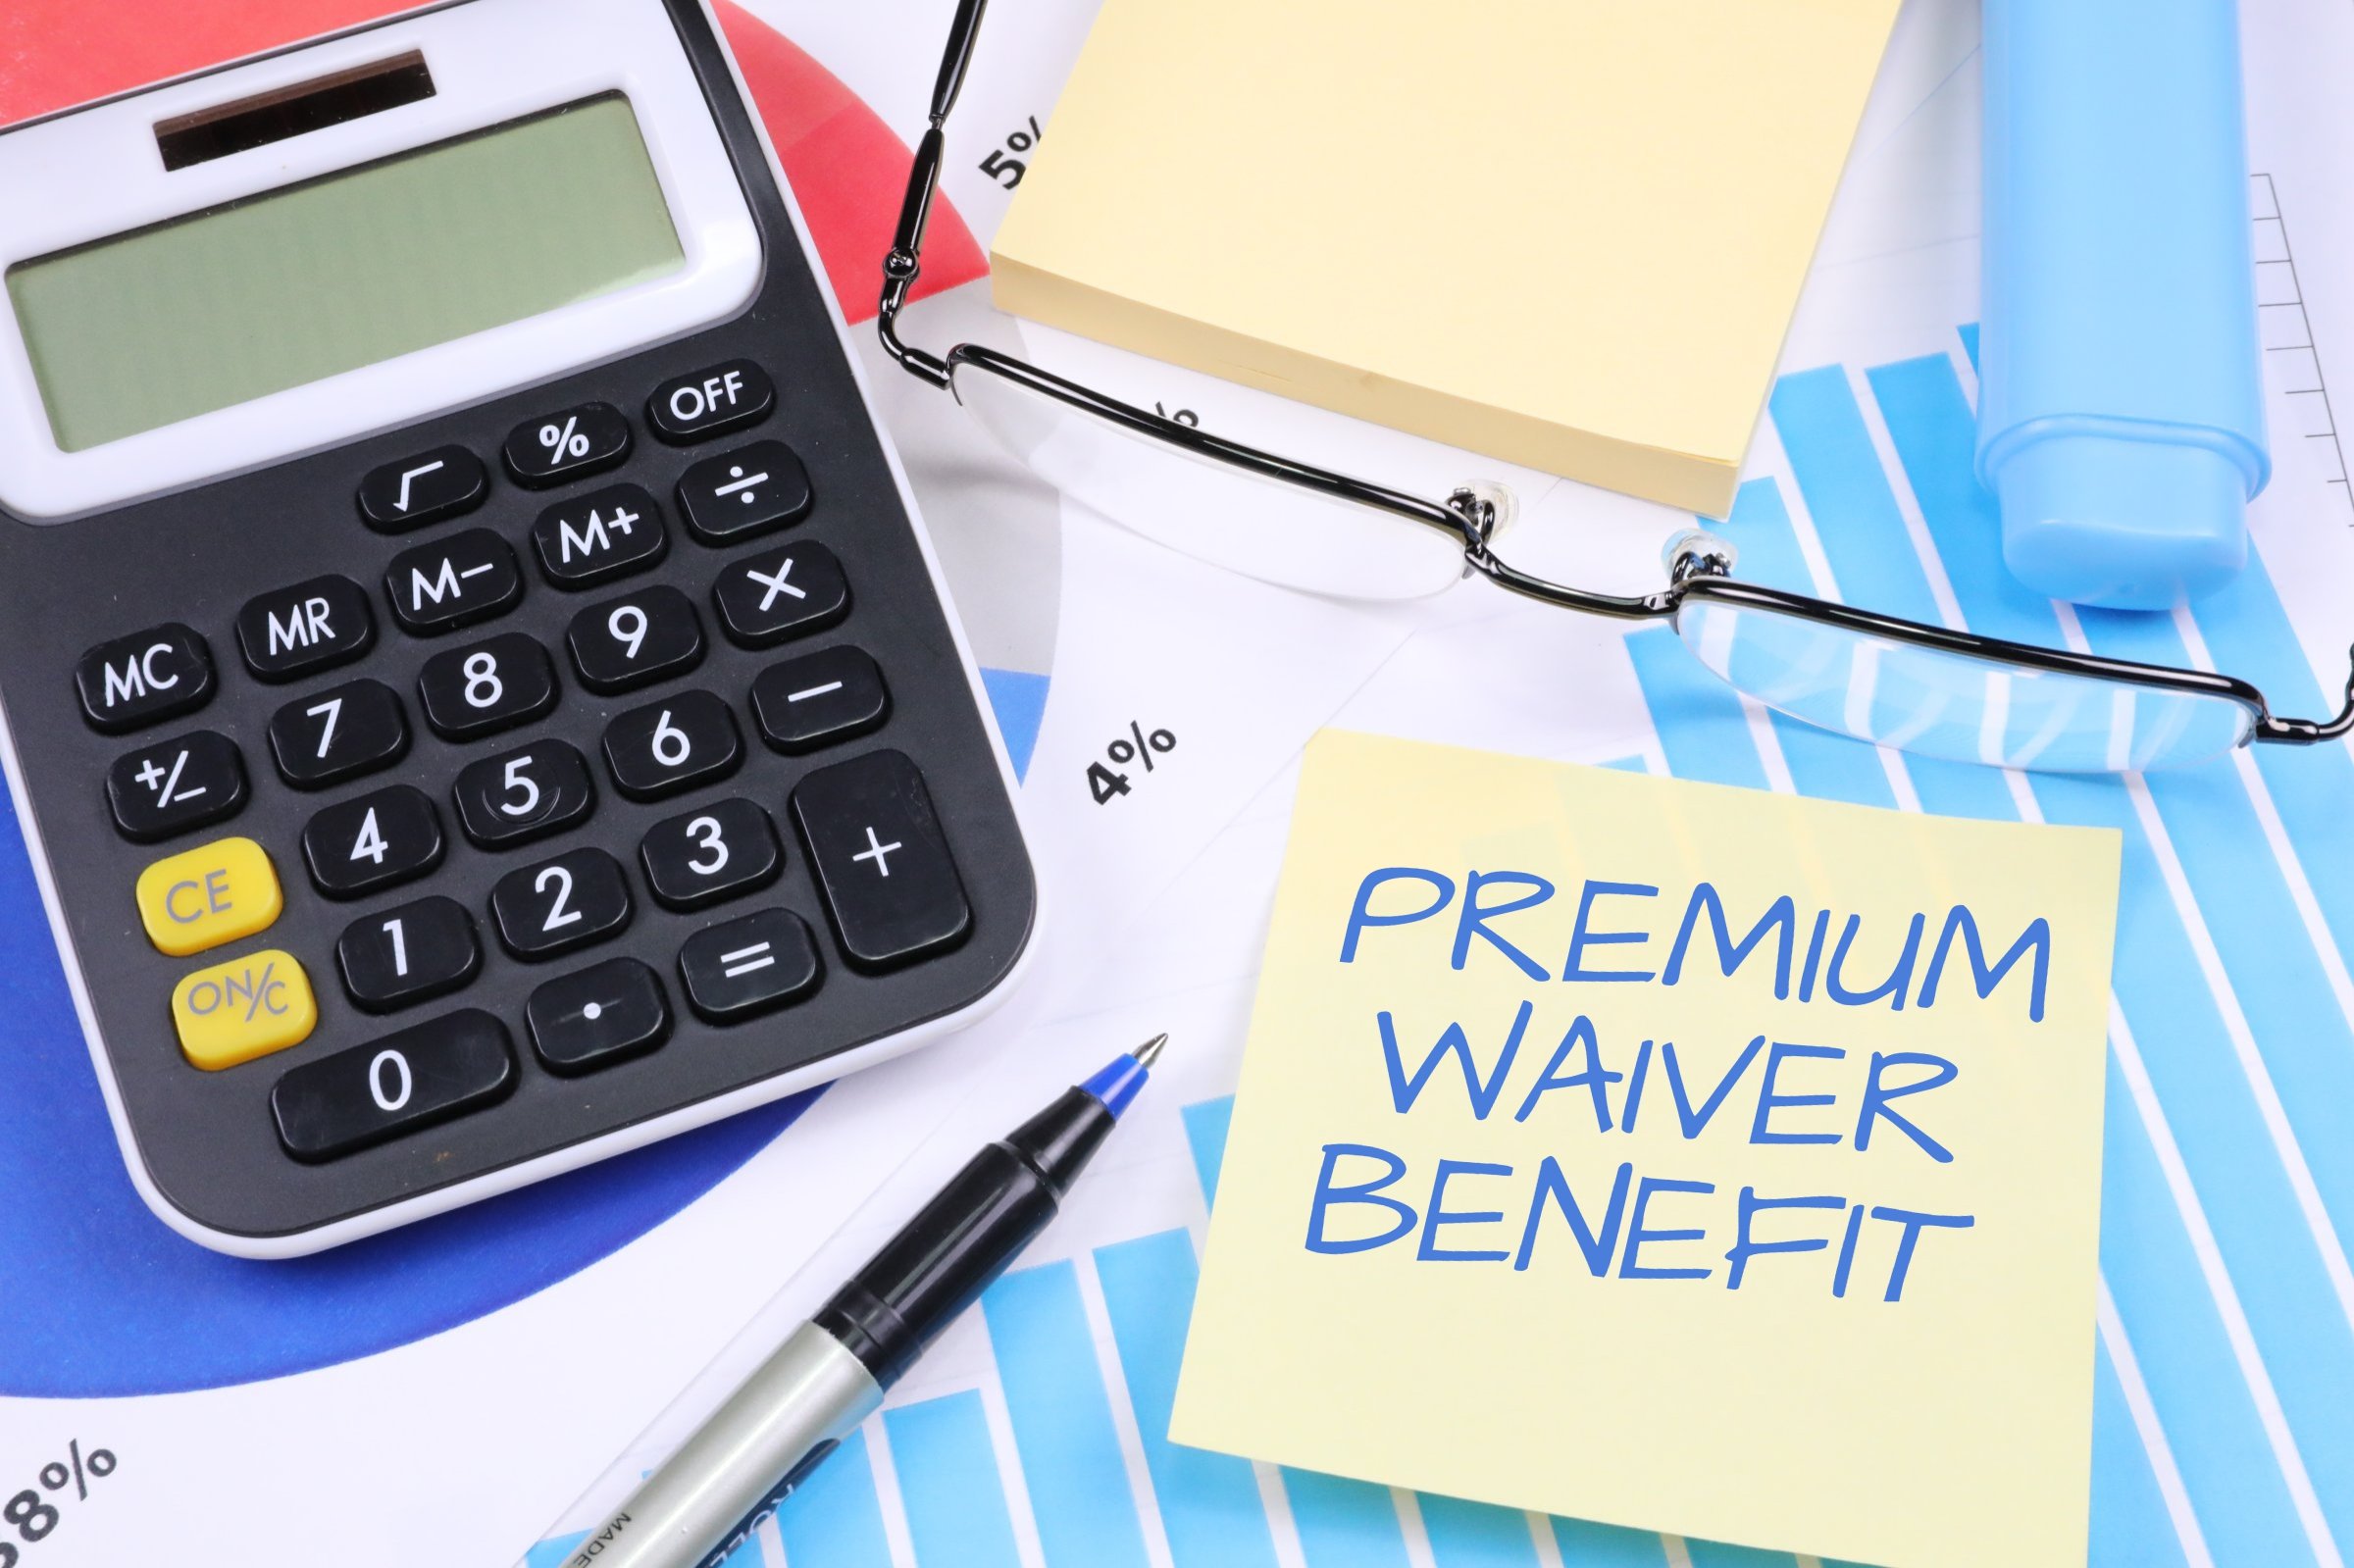 Premium Waiver Benefit